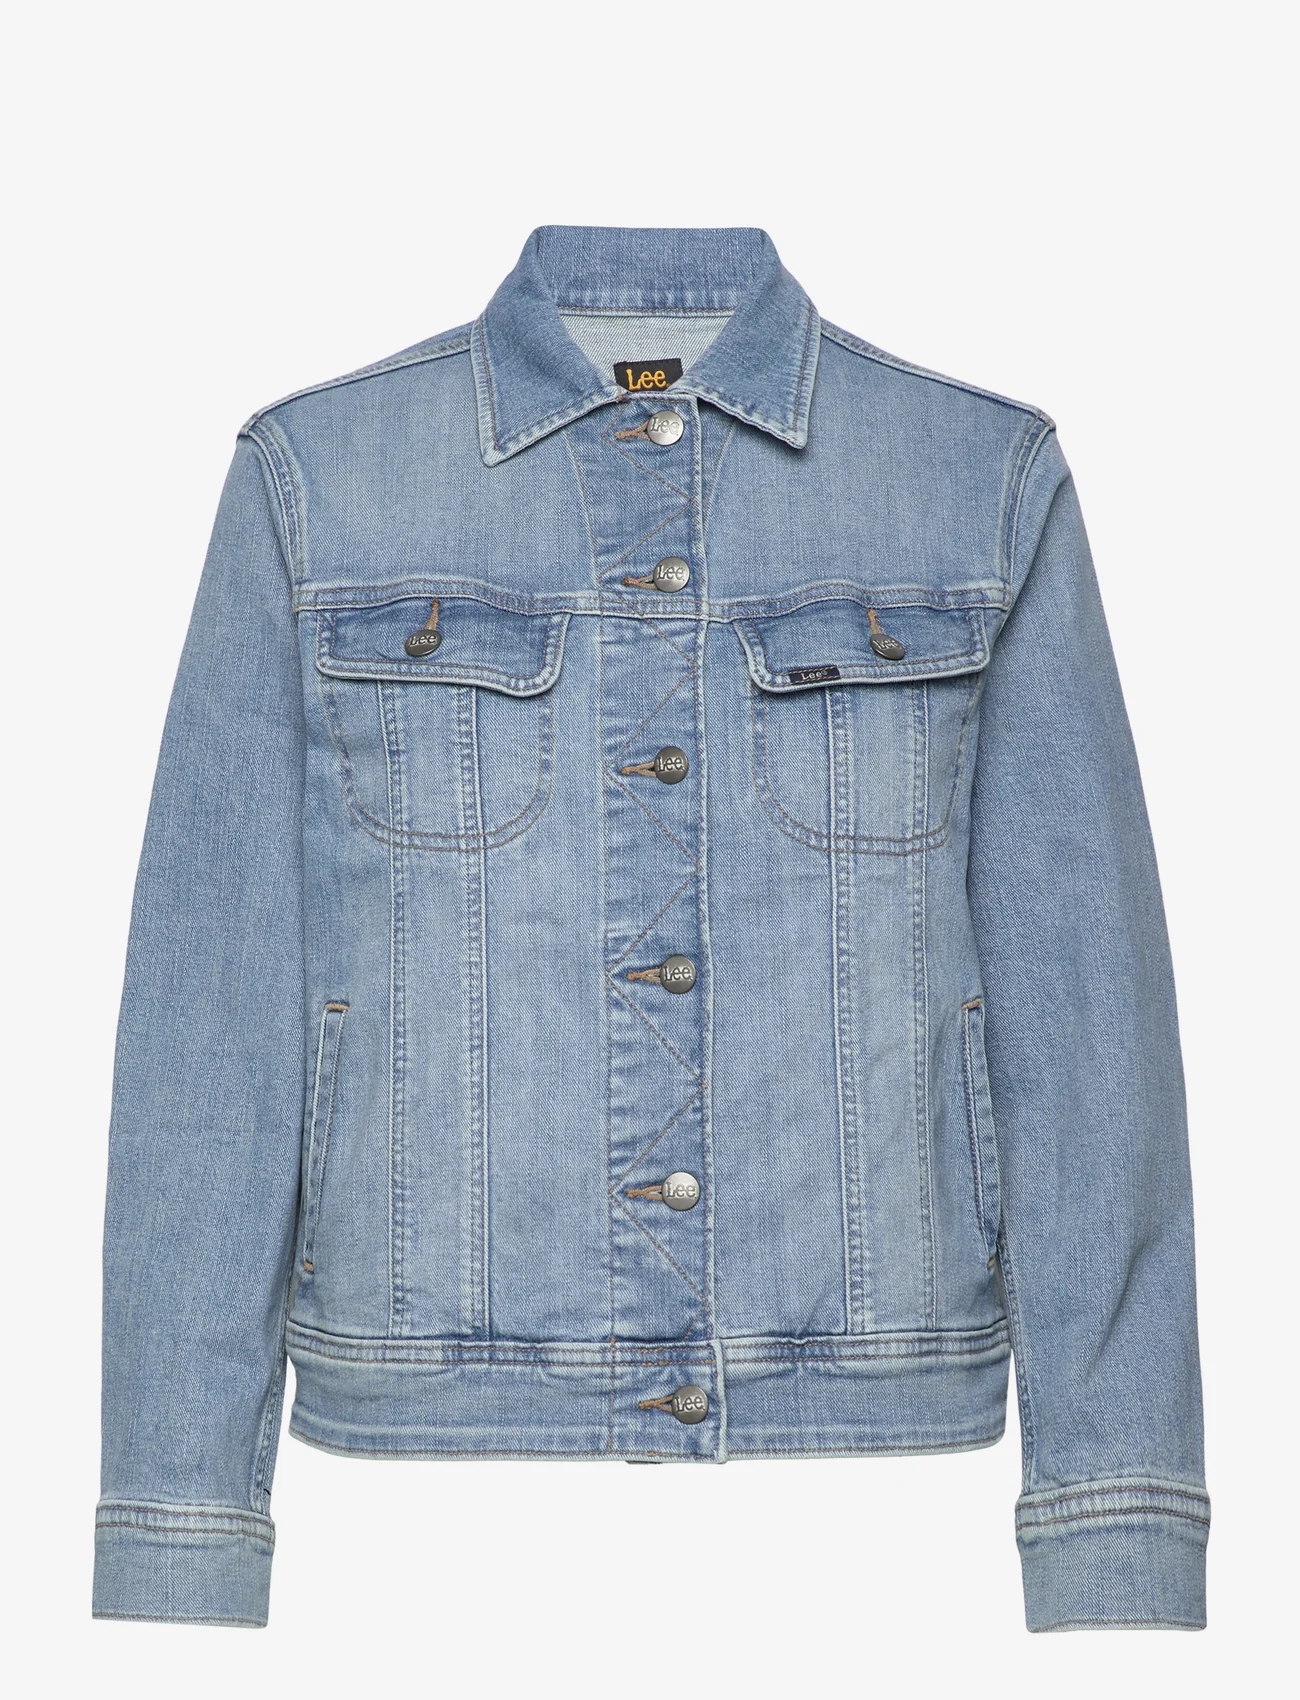 Lee Jeans Denim Jacket (Light Brights), ( €) | Large selection of  outlet-styles 